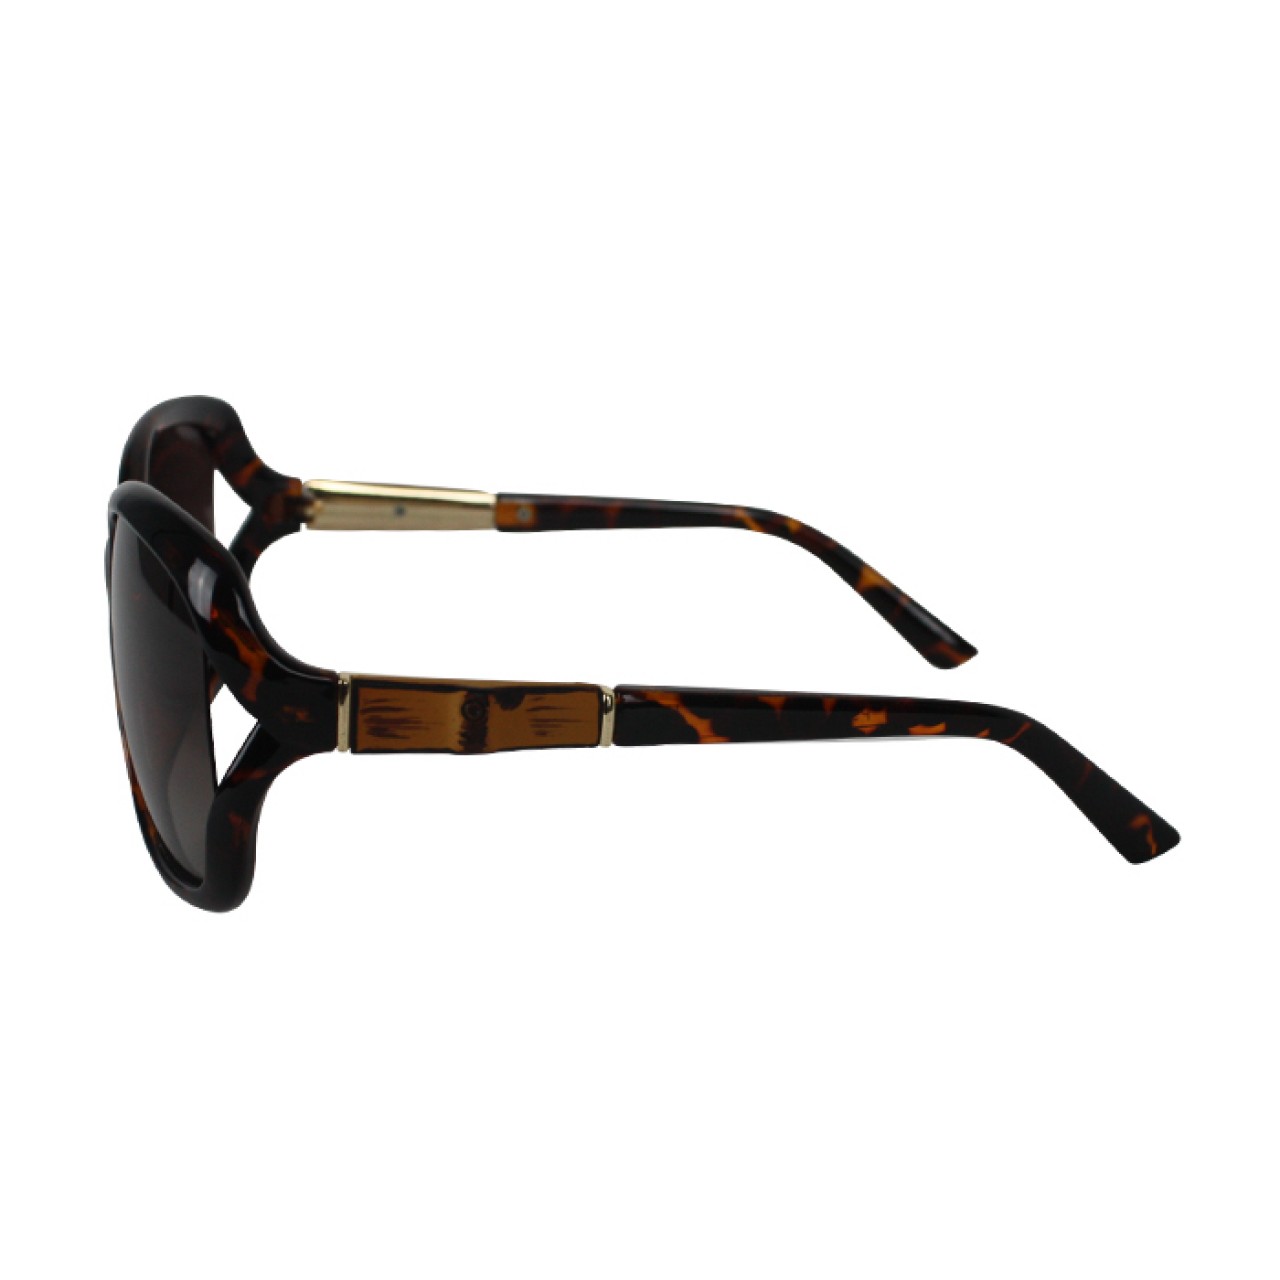 UV Protected Brown Top Round Frame Unisex Designer Sunglasses